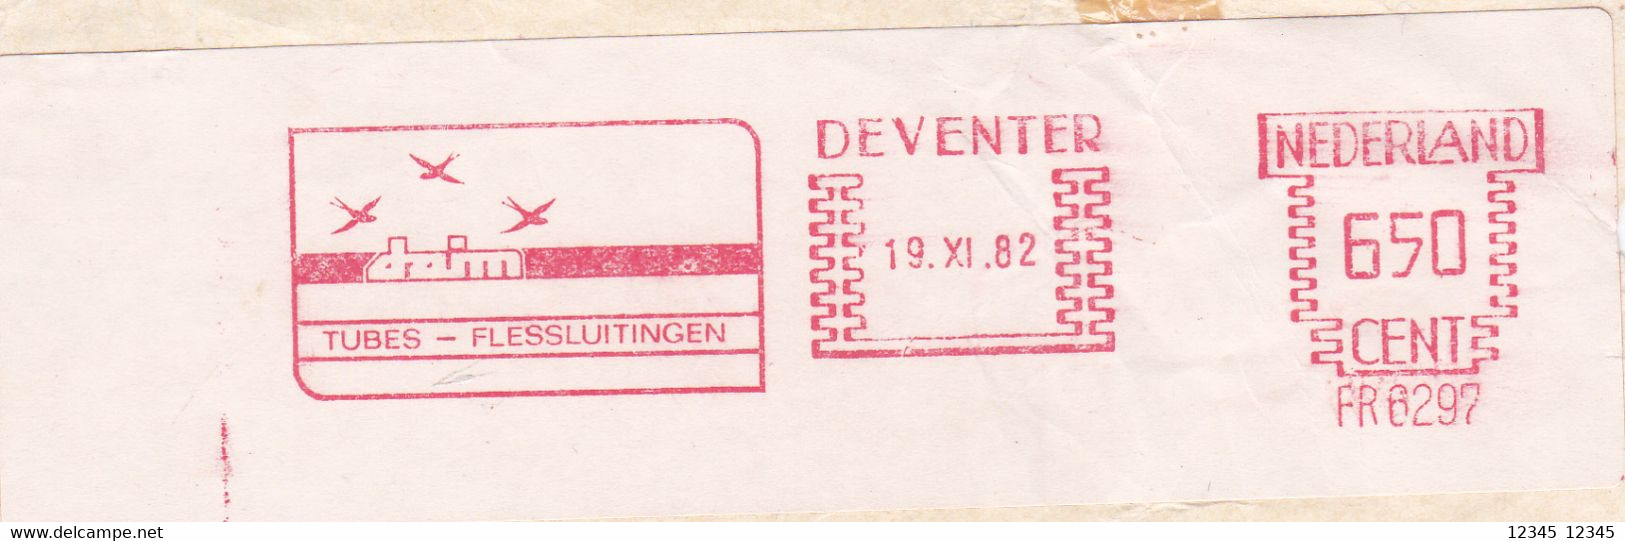 Nederland 1982, Daim Tubes-flessluitingen, Deventer - Macchine Per Obliterare (EMA)